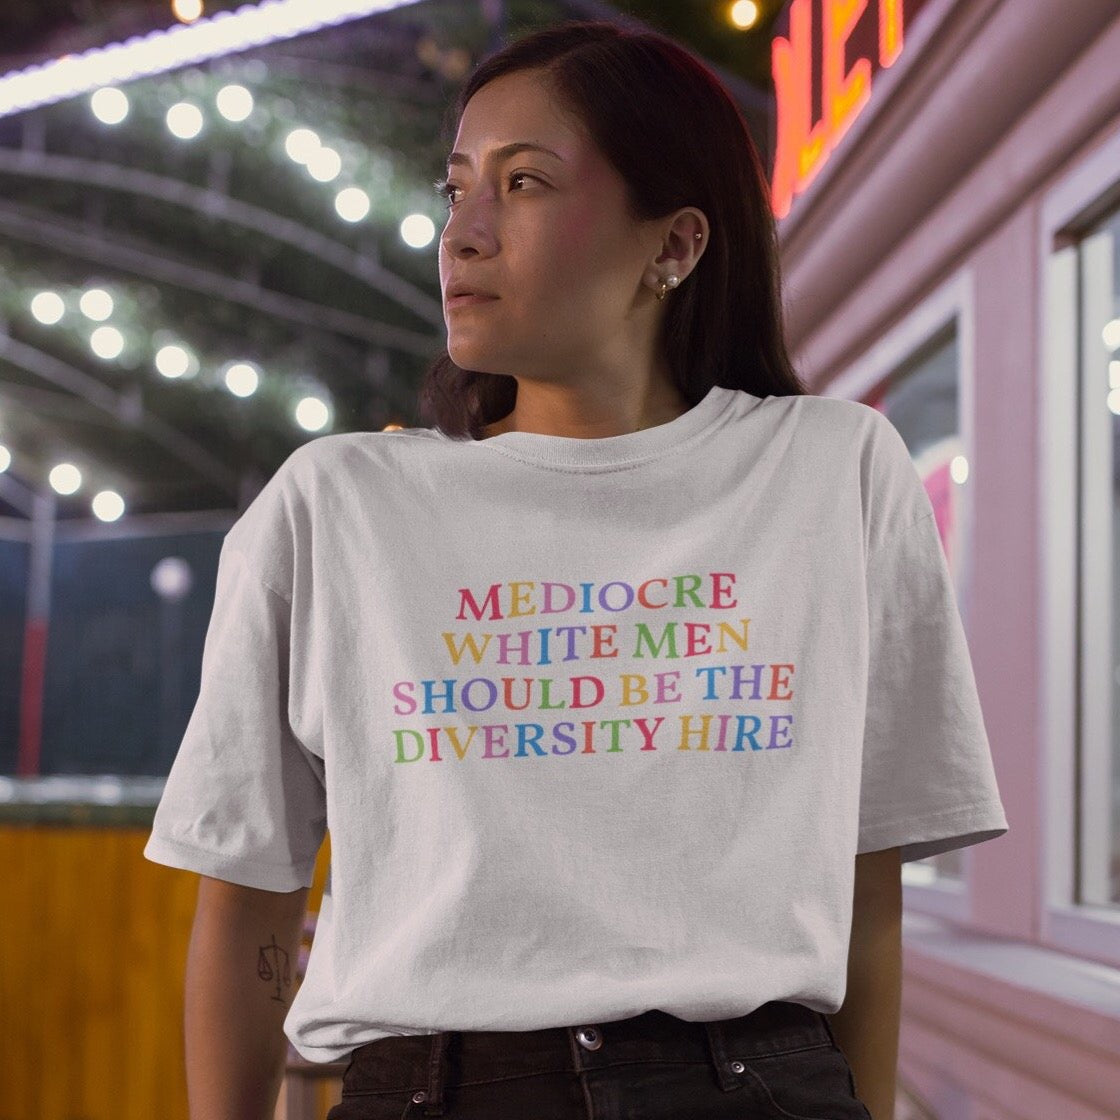 White feminist t-shirt: 'Mediocre White Men Should Be The Diversity Hire' message